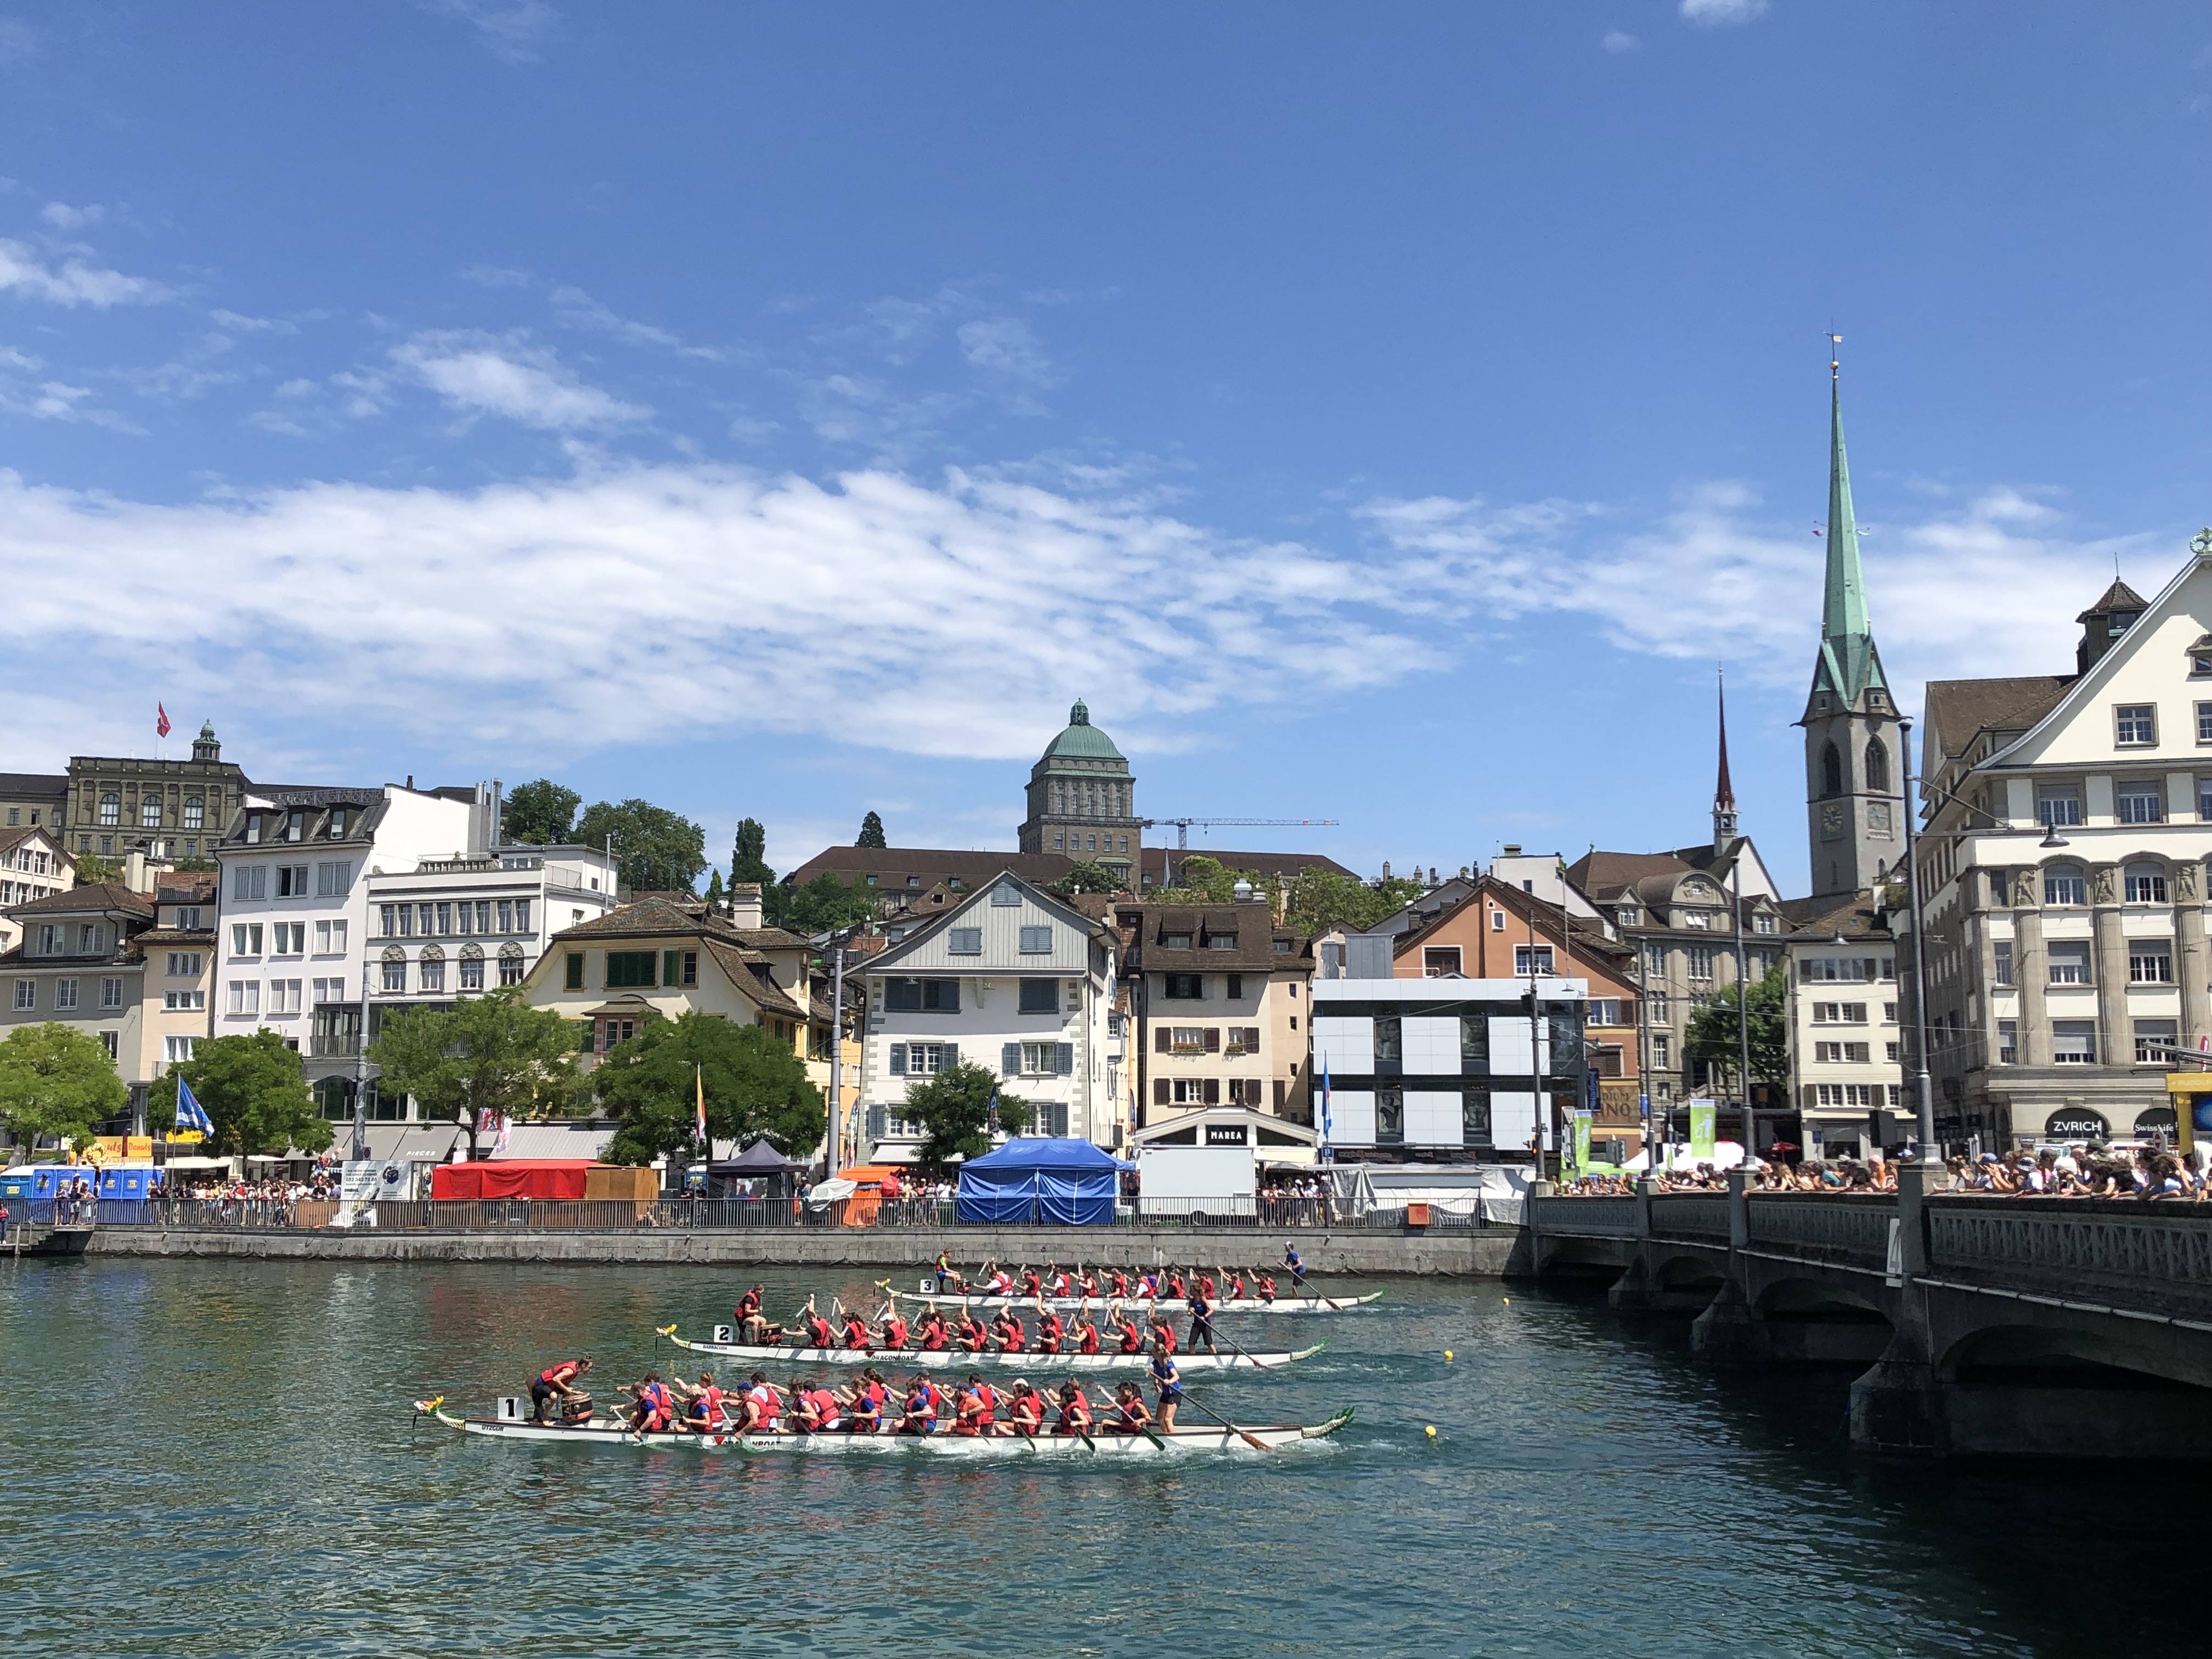 Race at the dragon boat event at the Züri Fäscht in Zurich, Switzerland, on July 8 (Zurich time).